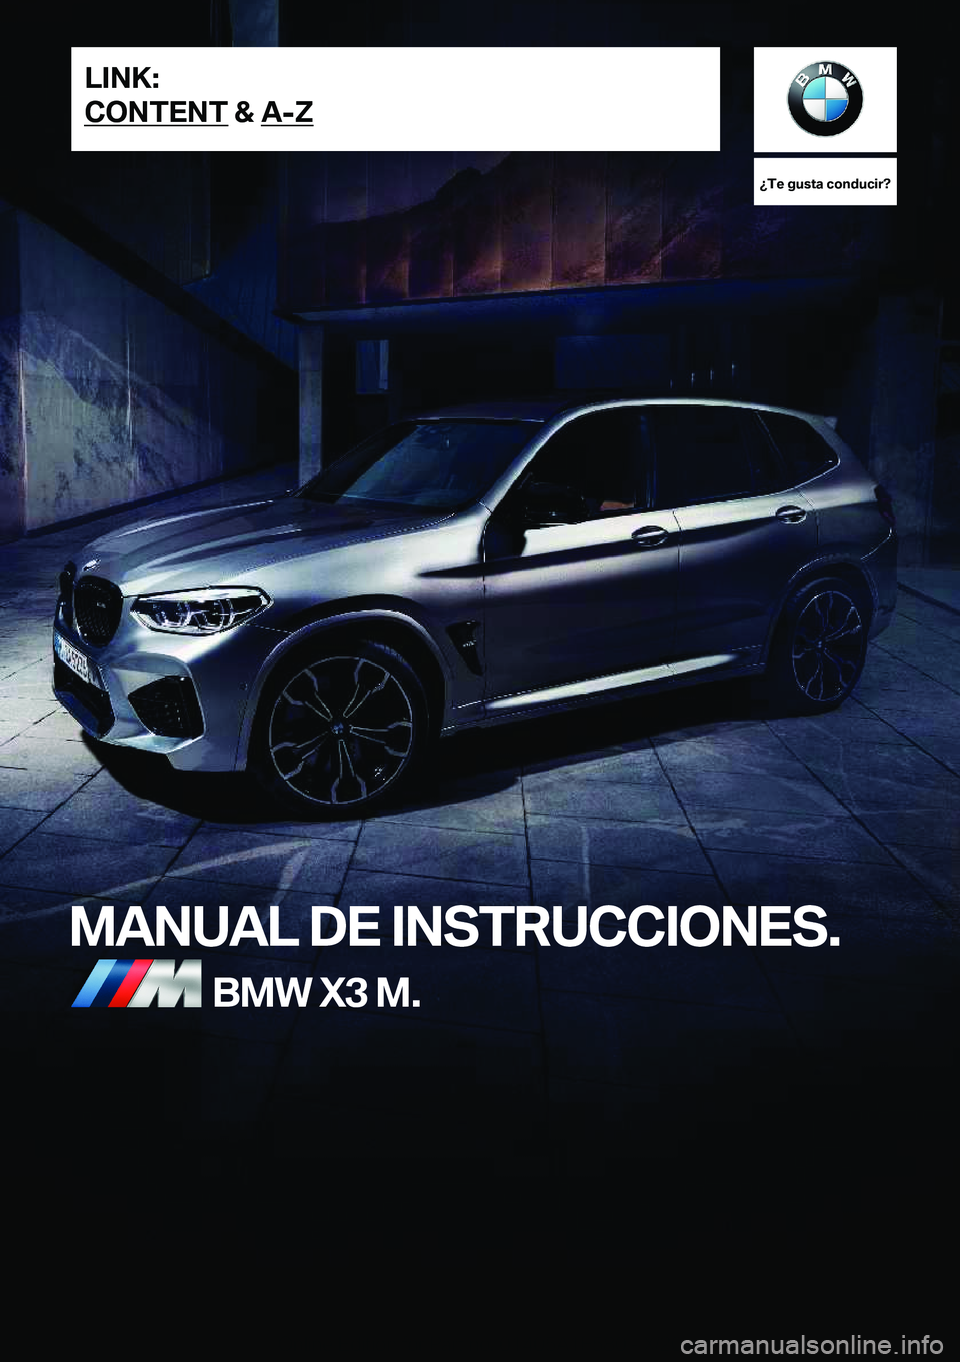 BMW X3 M 2021  Manuales de Empleo (in Spanish) ��T�e��g�u�s�t�a��c�o�n�d�u�c�i�r� 
�M�A�N�U�A�L��D�E��I�N�S�T�R�U�C�C�I�O�N�E�S�.�B�M�W��X�3��M�.�L�I�N�K�:
�C�O�N�T�E�N�T��&��A�-�Z�O�n�l�i�n�e��E�d�i�t�i�o�n��f�o�r��P�a�r�t��n�o�.��0